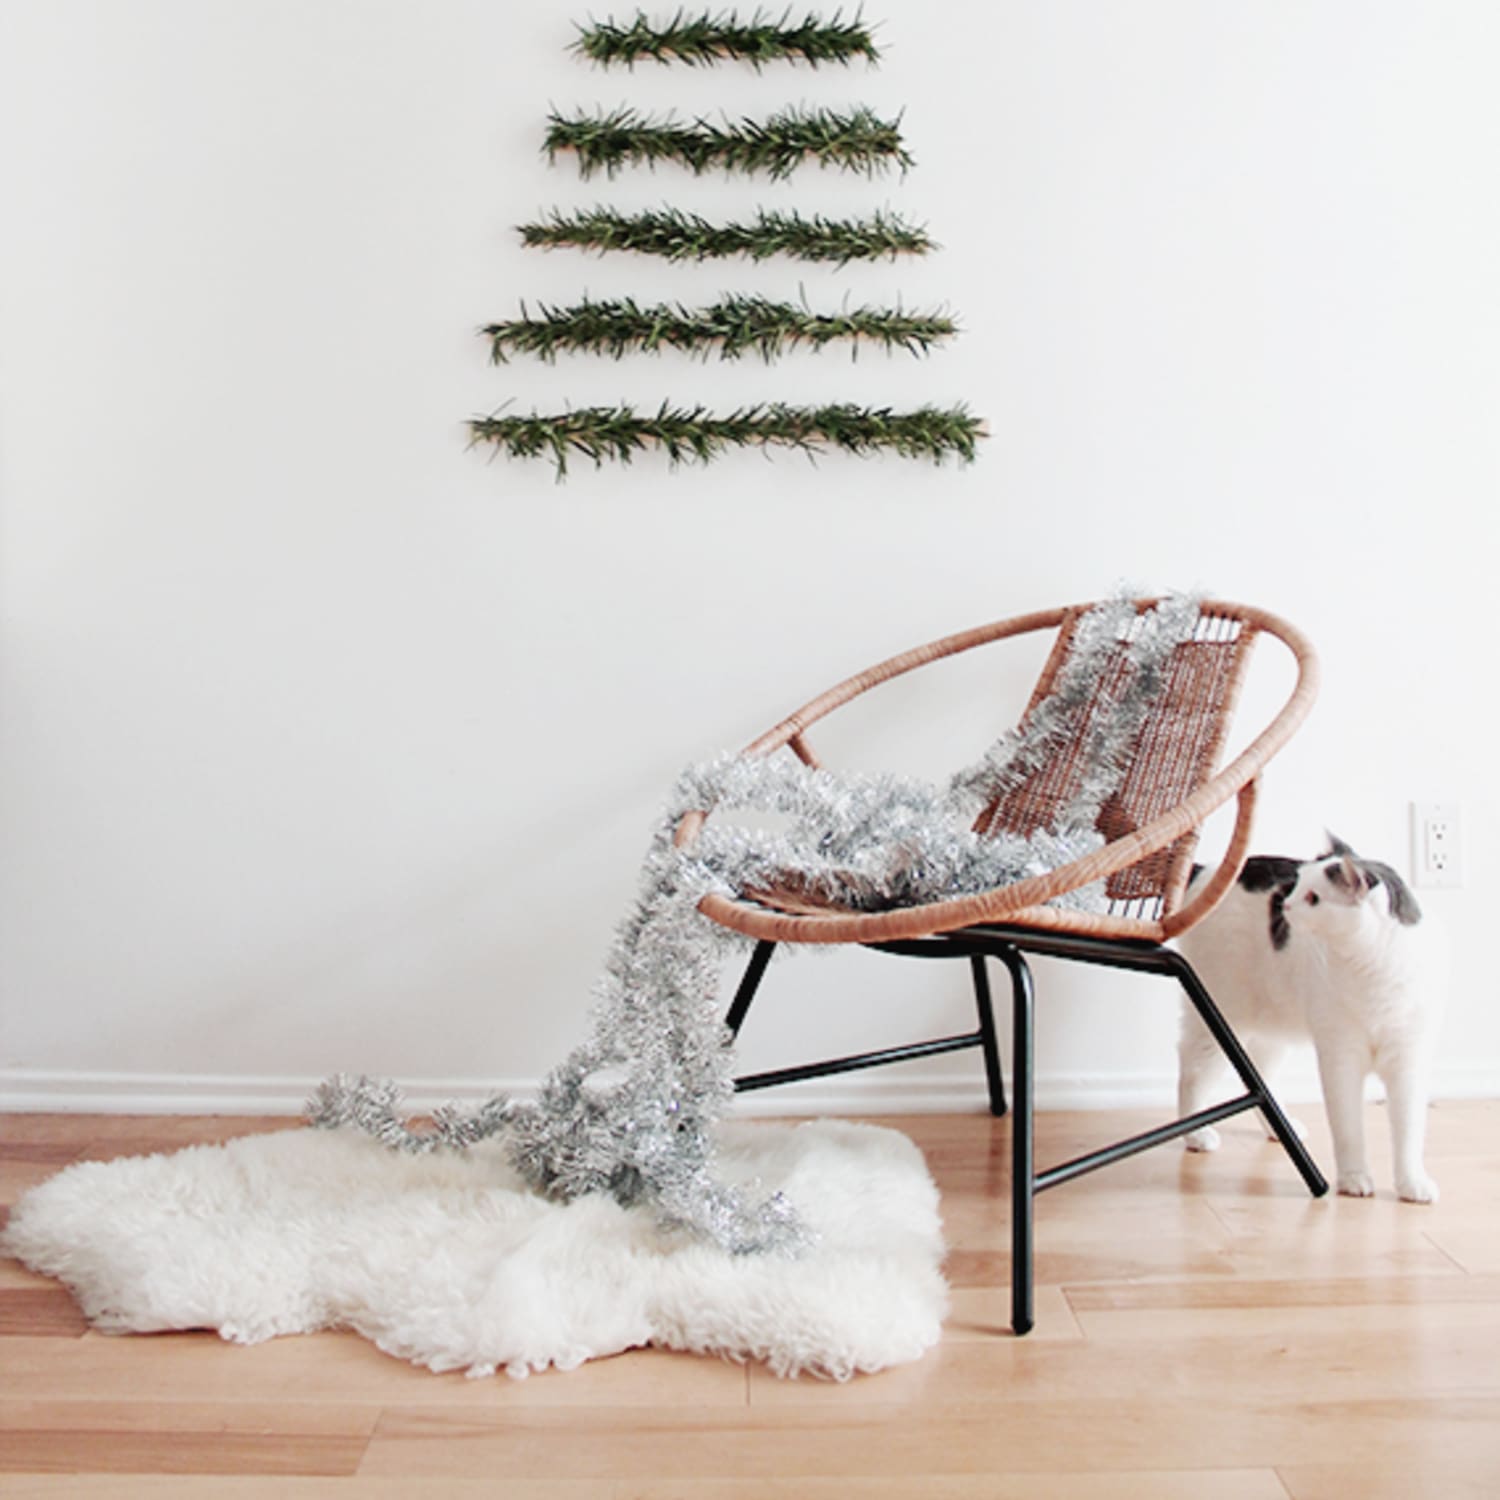 Washi Tape Christmas Tree - Keeping it Simple